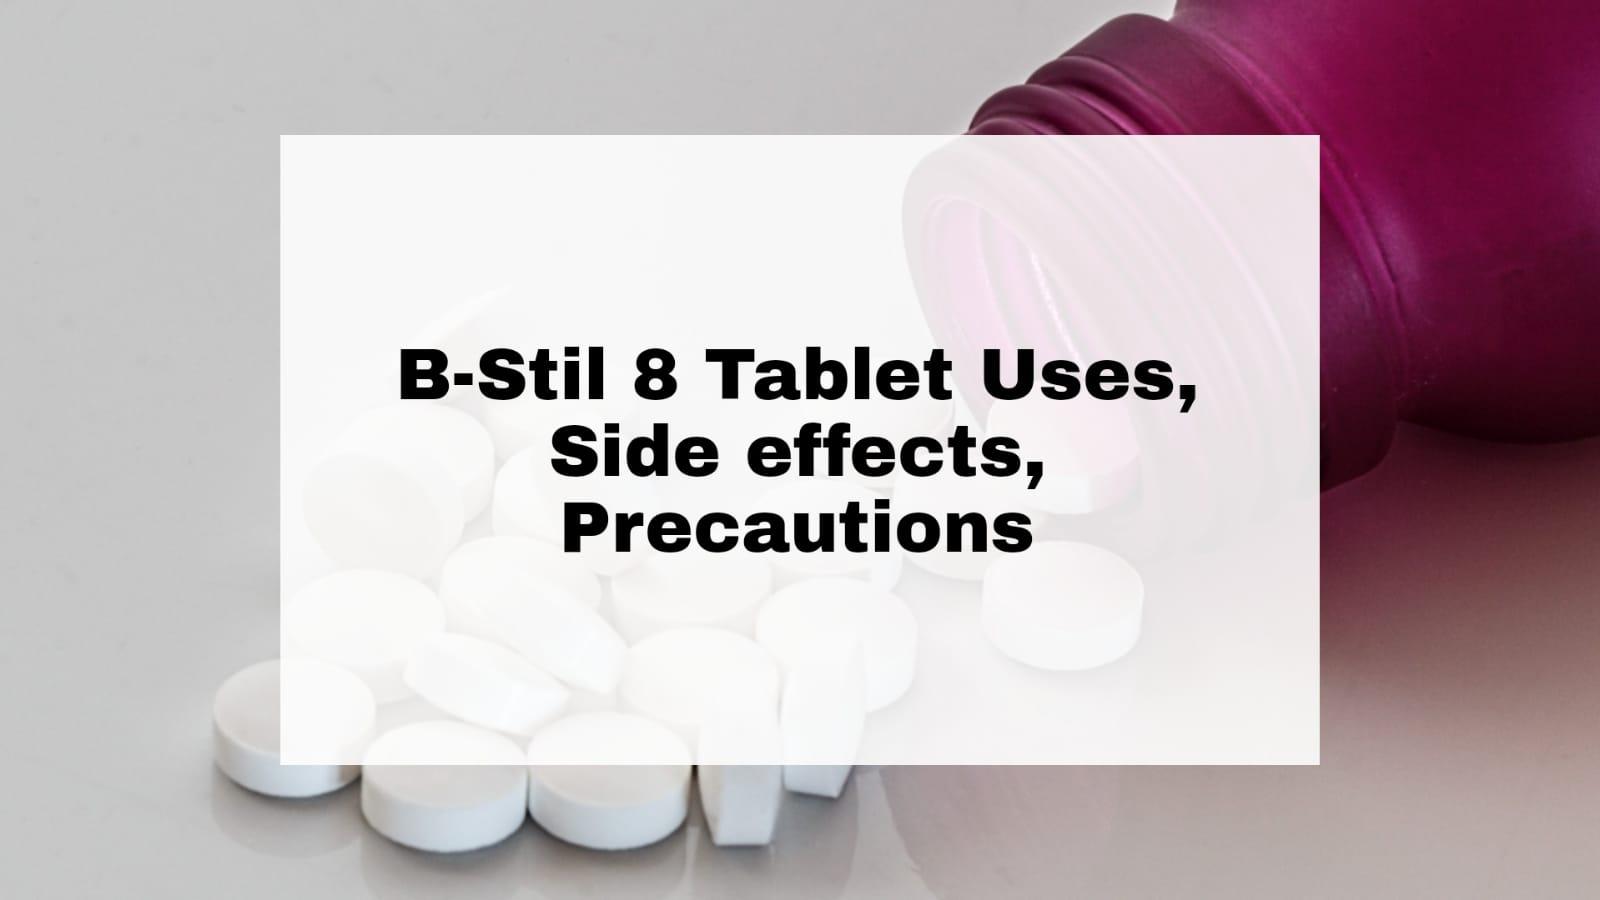 B-Stil 8 Tablet